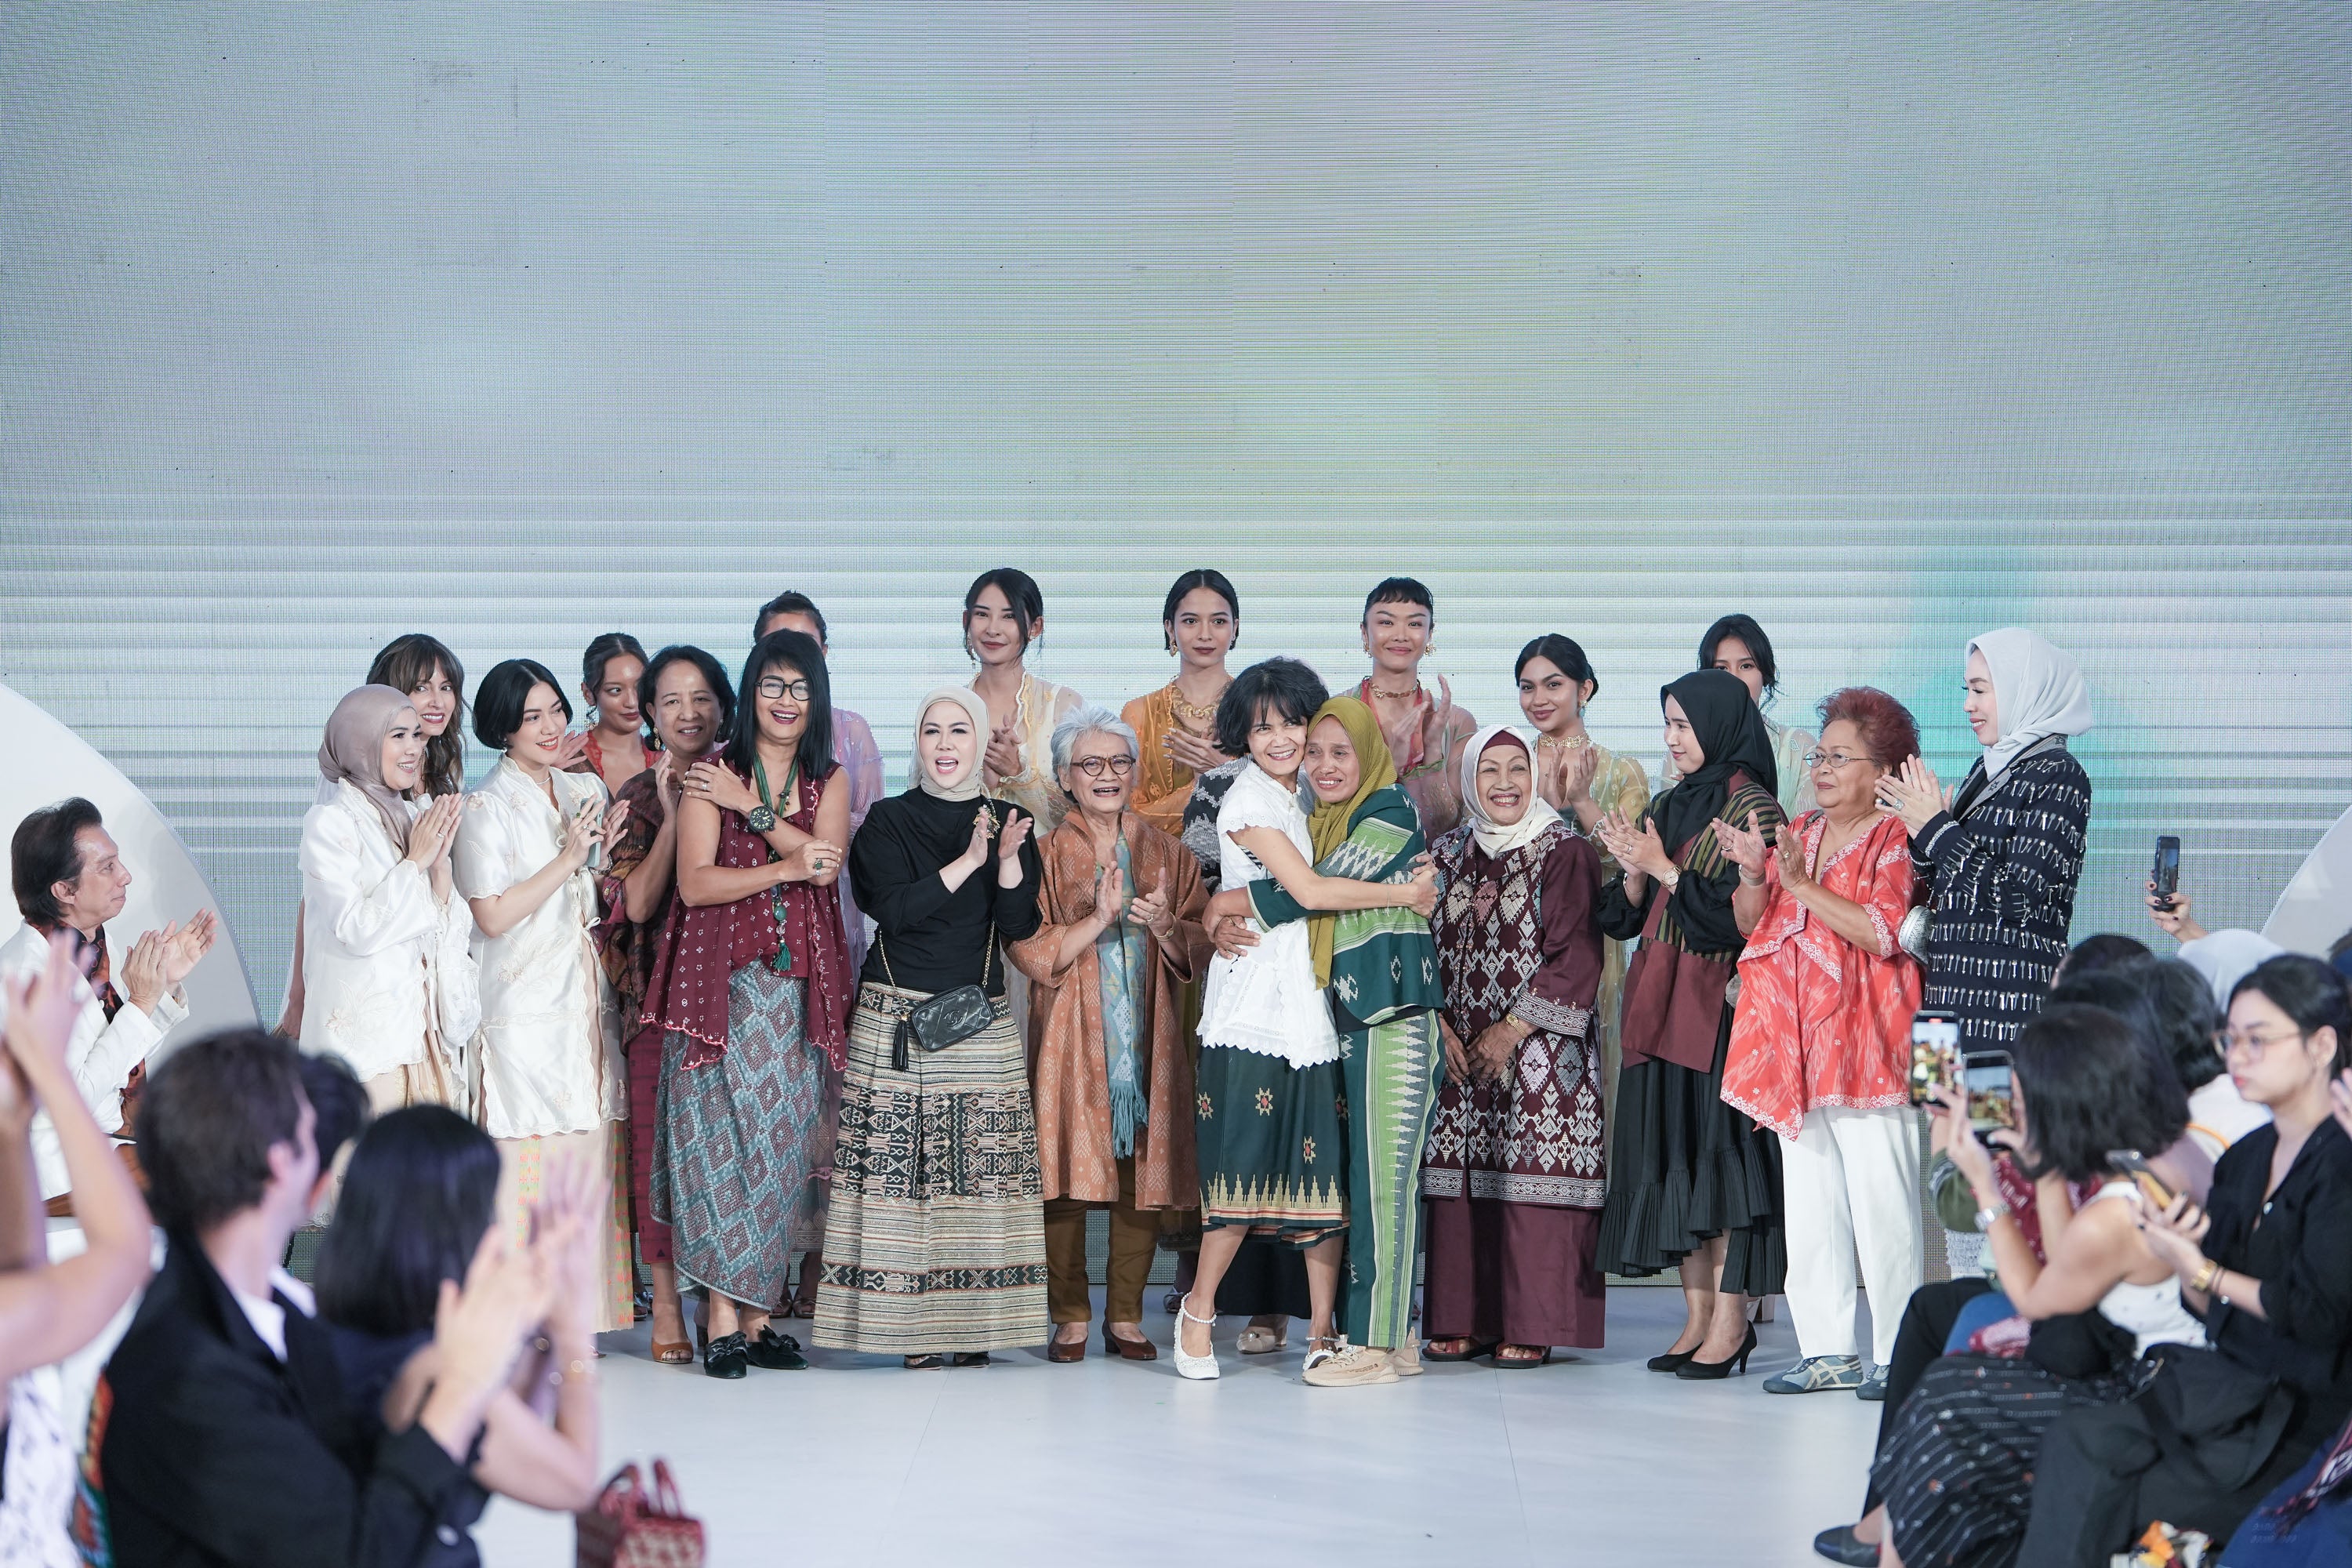 Sejauh Mata Memandang x Cita Tenun Indonesia Unveil the "RONA" Collection